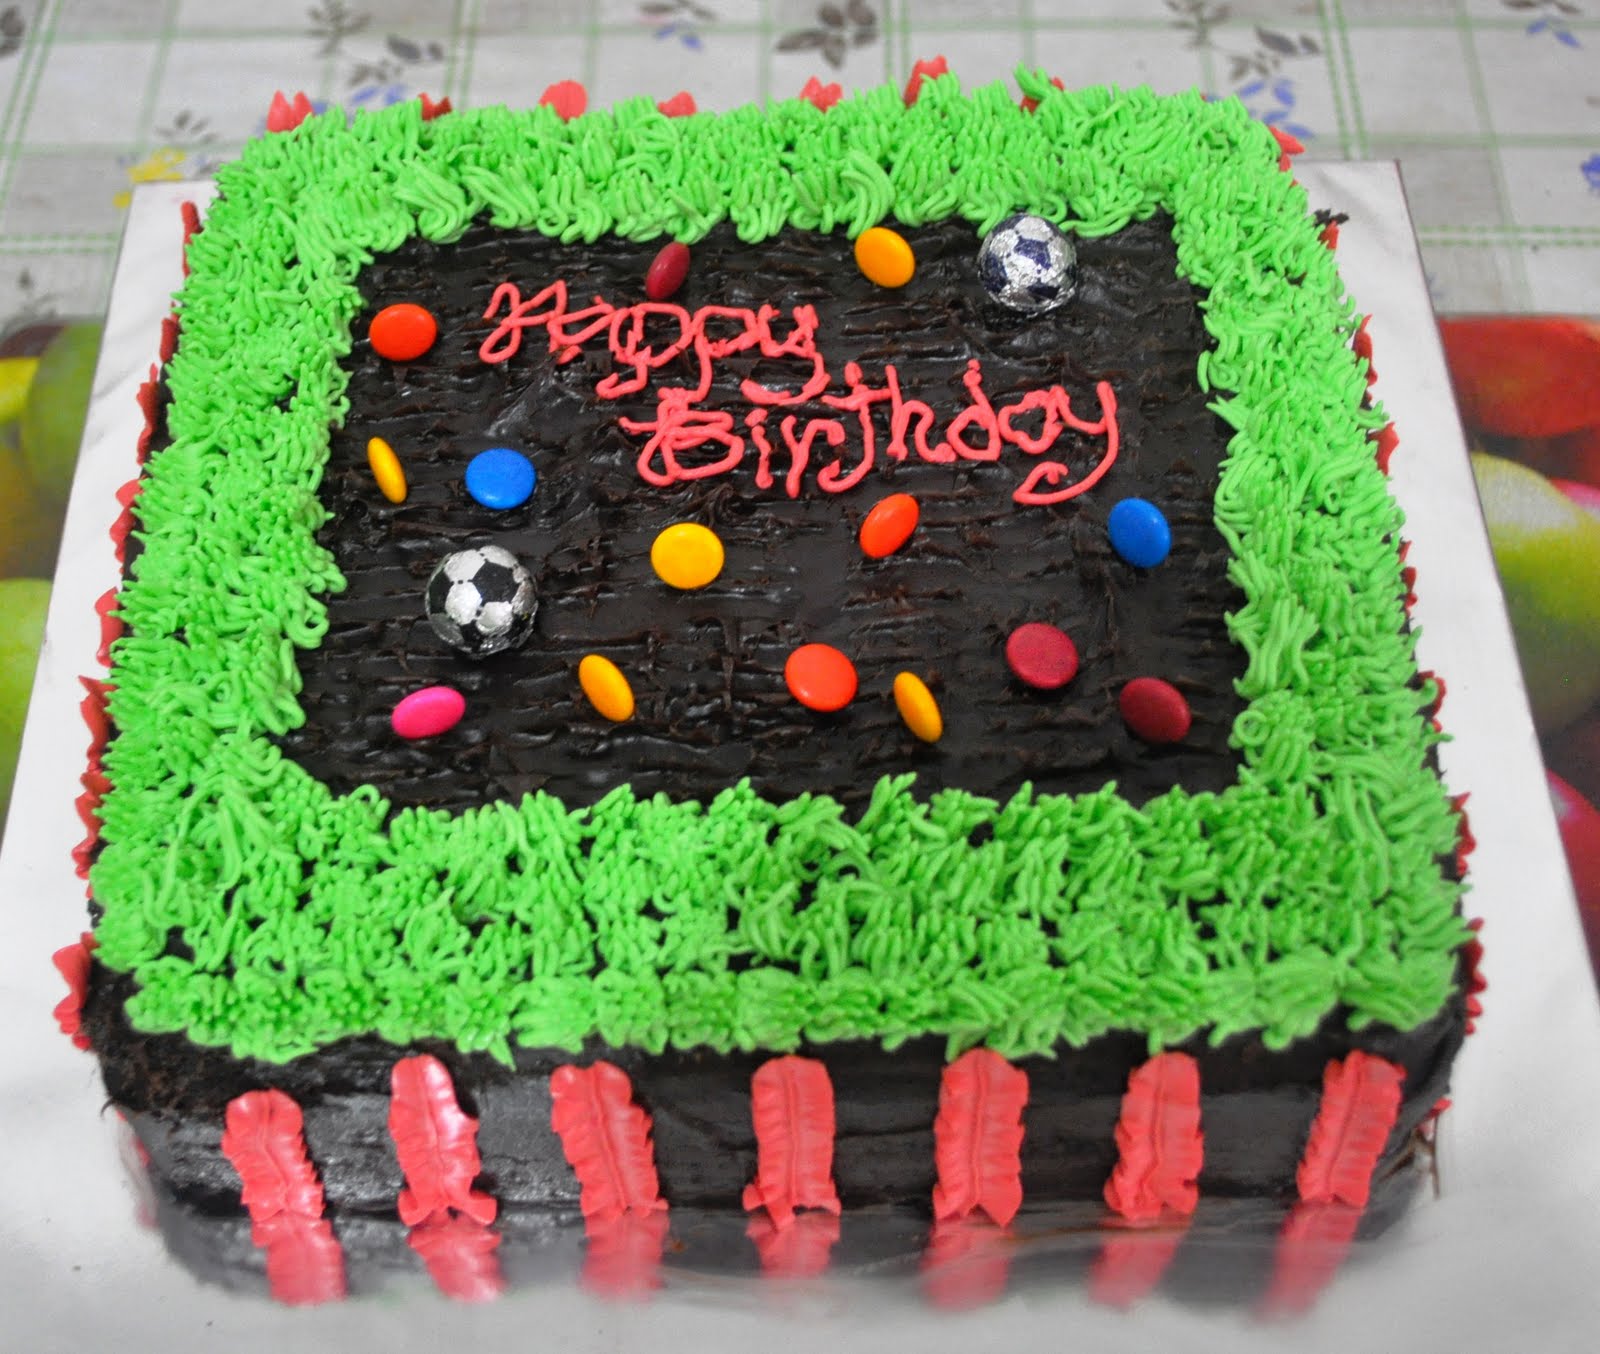 Cakes and Chocolates for U: Kek untuk birthday boy